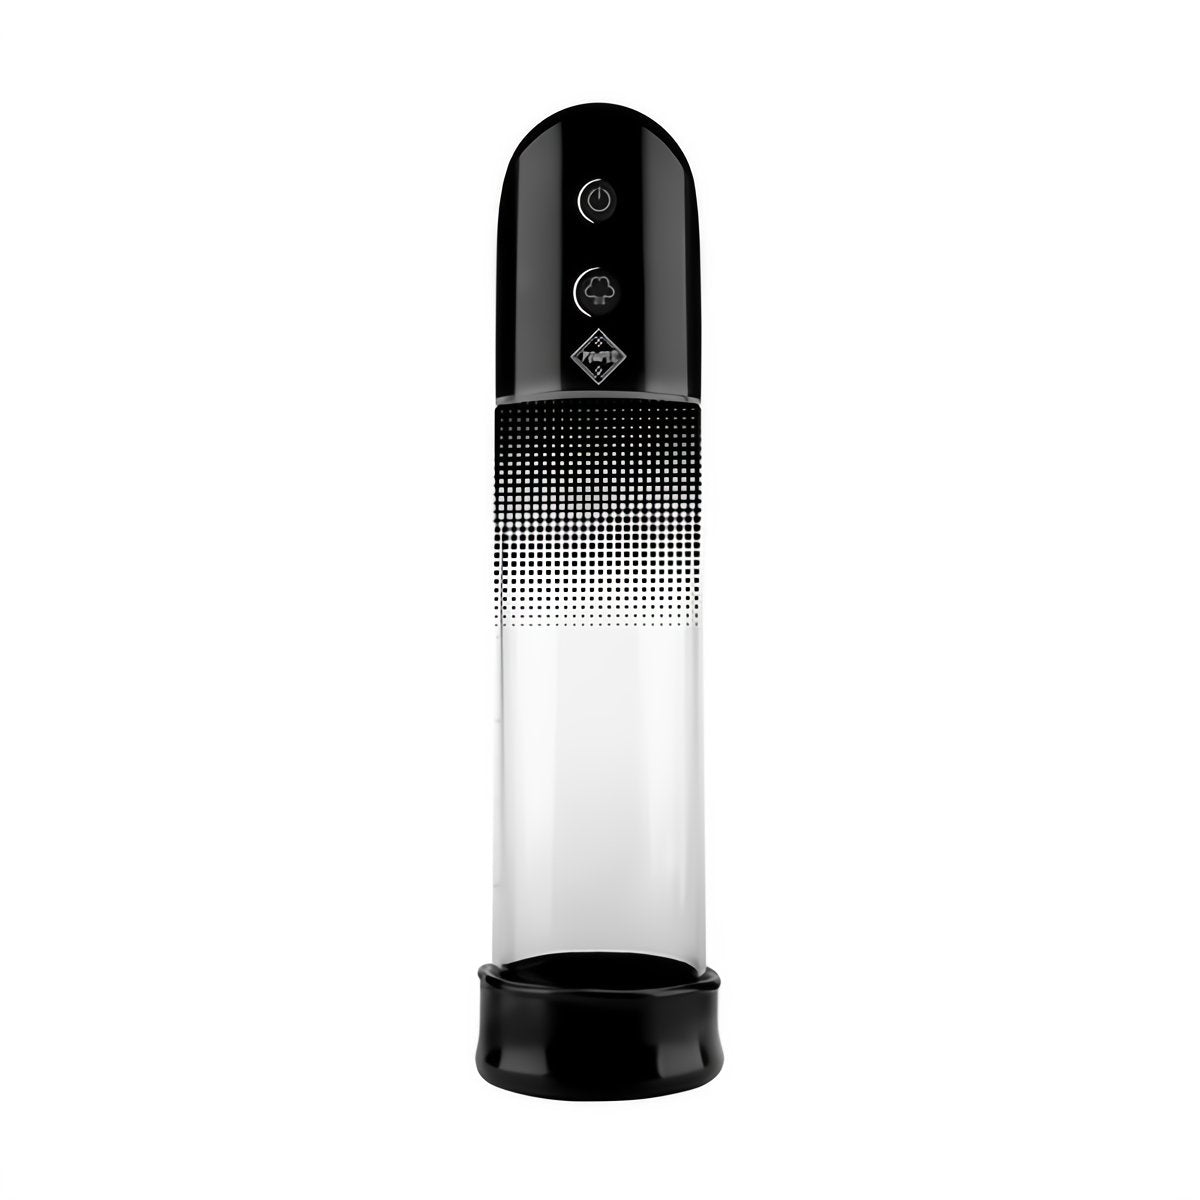 Automatic Luv Penis Pump - EroticToyzProducten,Toys,Toys voor Mannen,Penispompen,Elektrische Pompen,,MannelijkPumped by Shots